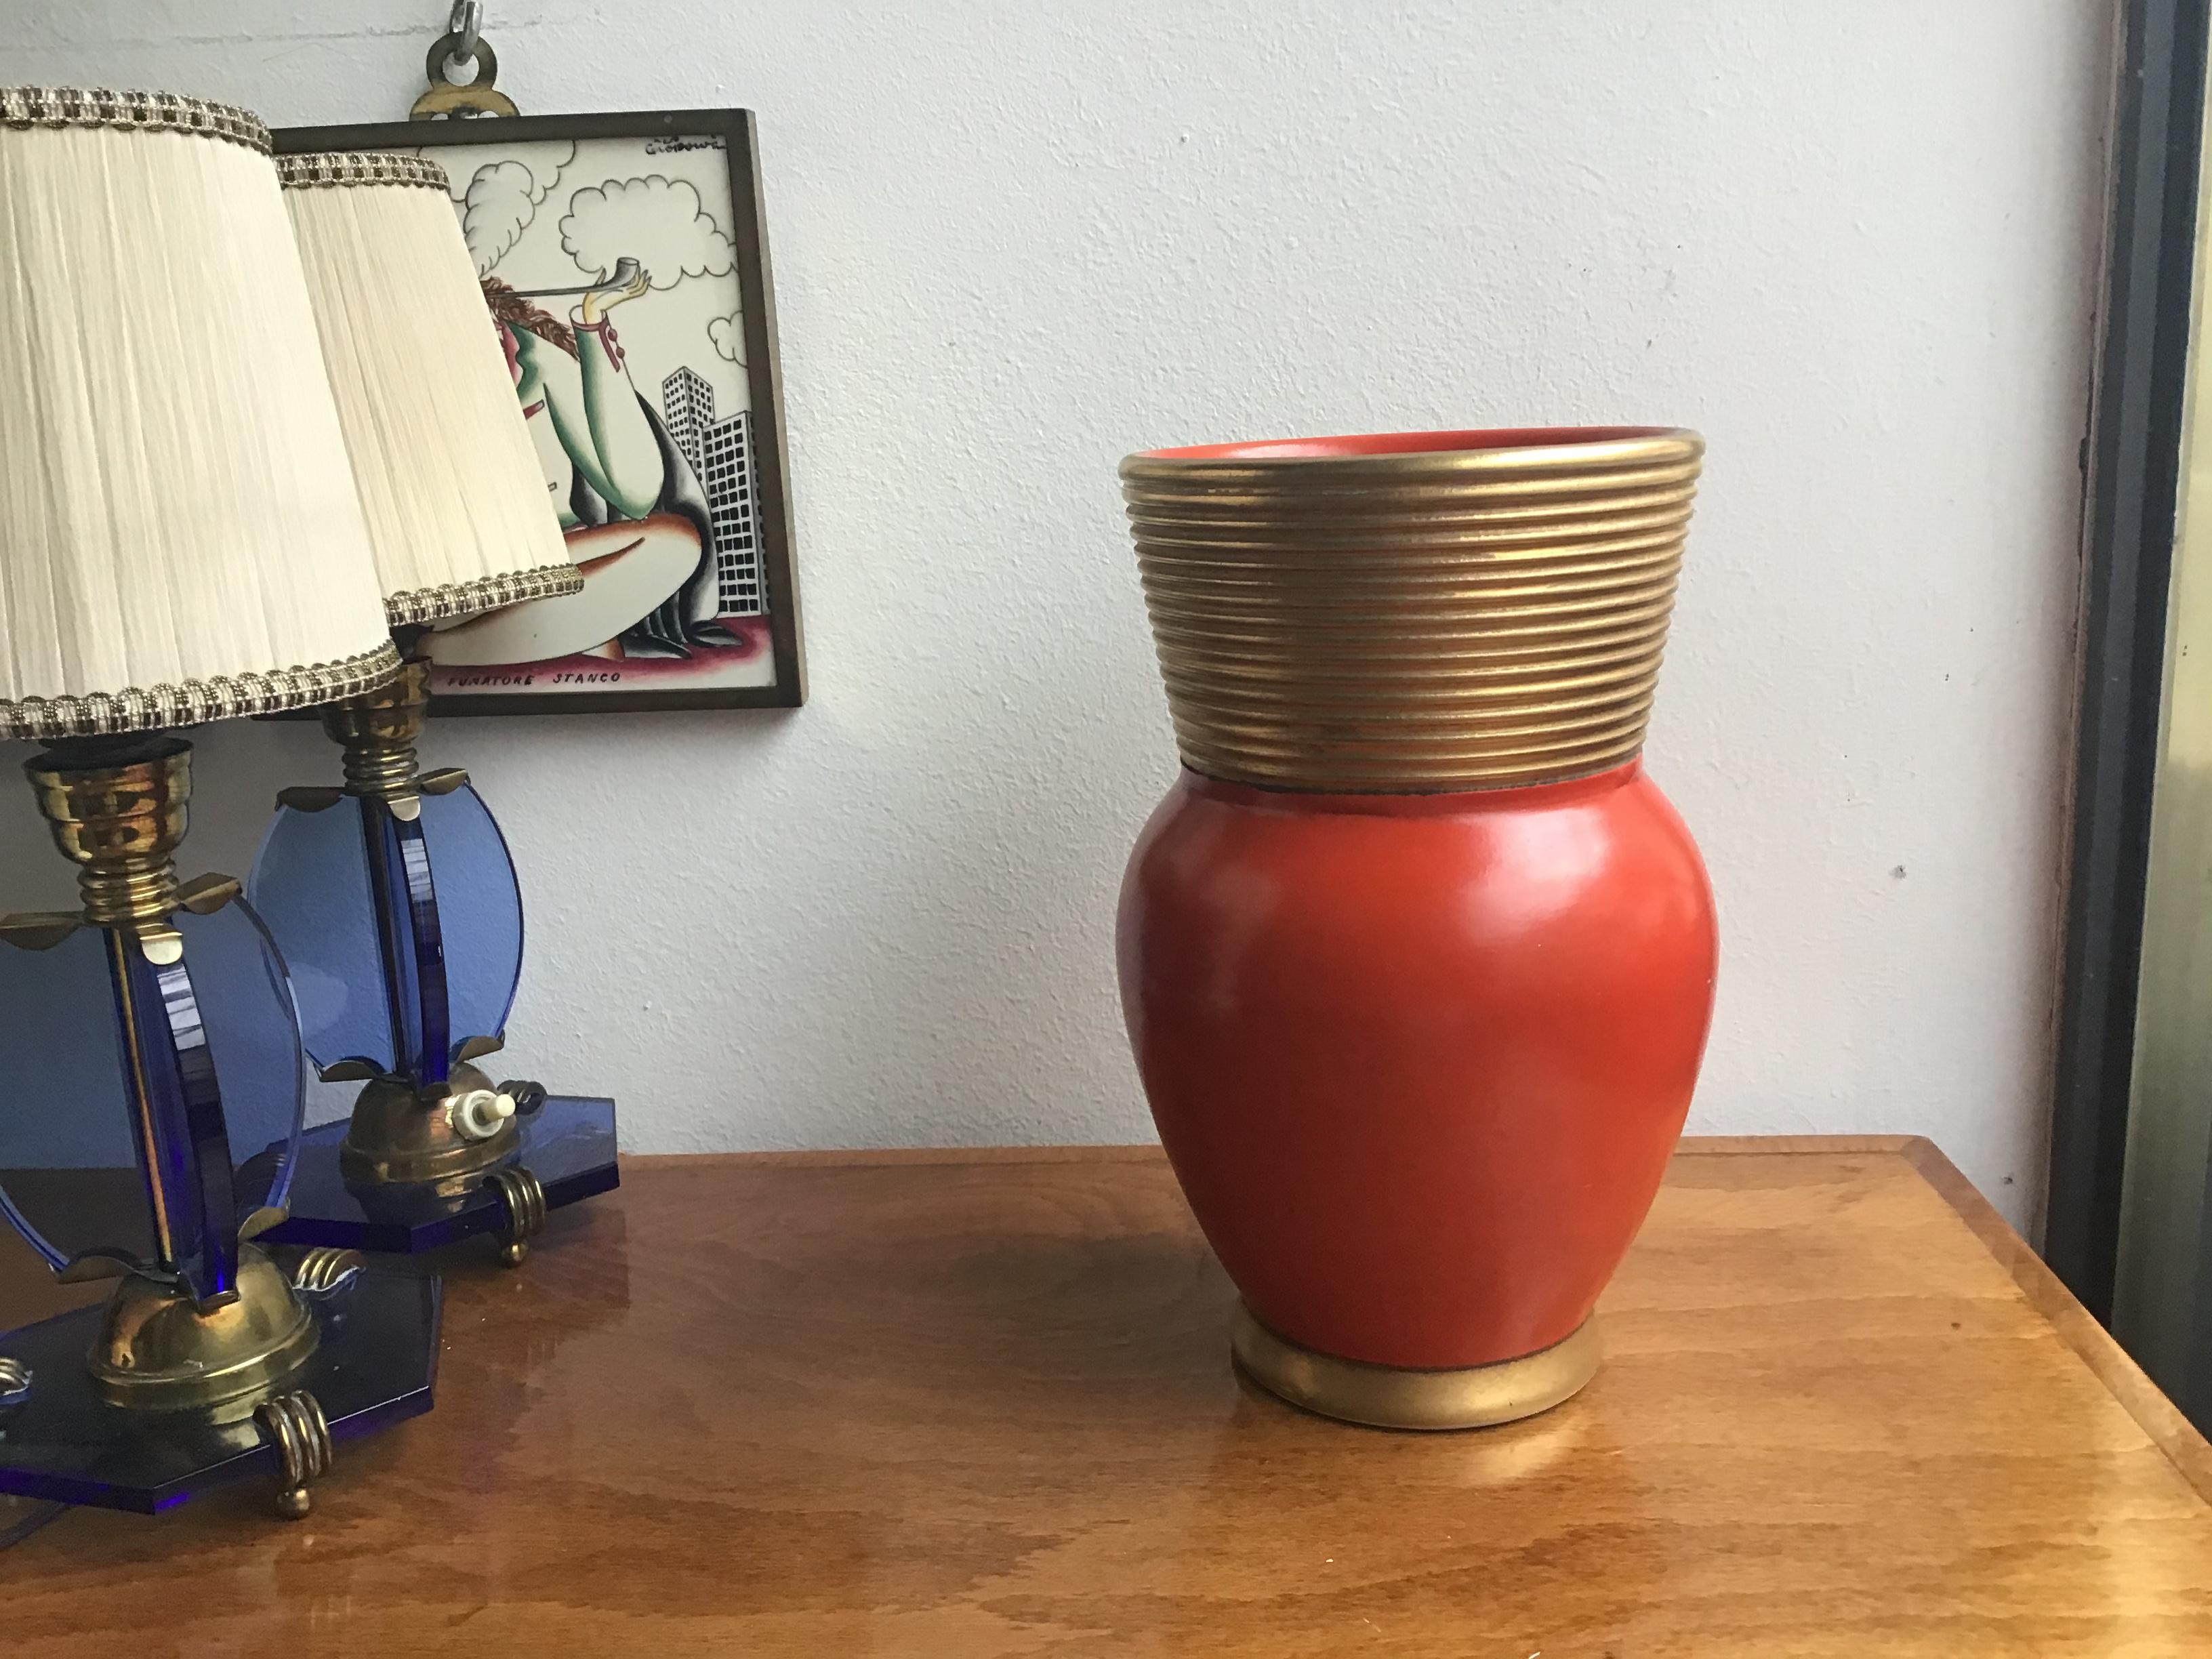 Gio Ponti Richard Ginori vase ceramic gold red 1940 Italy.